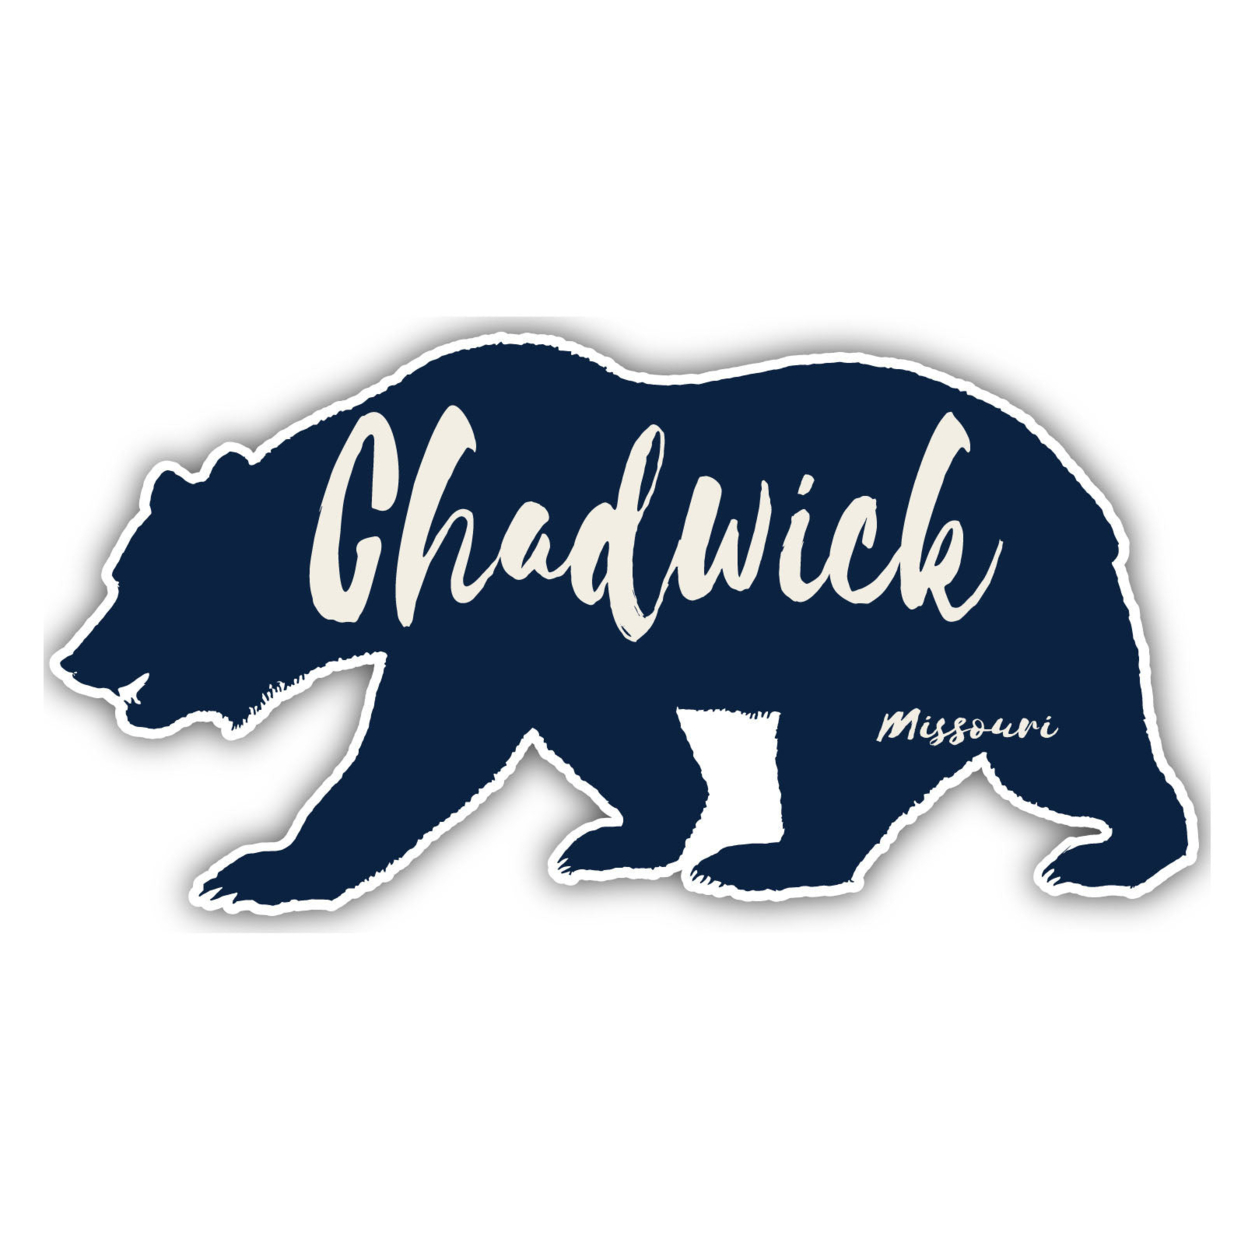 Chadwick Missouri Souvenir Decorative Stickers (Choose Theme And Size) - Single Unit, 2-Inch, Tent